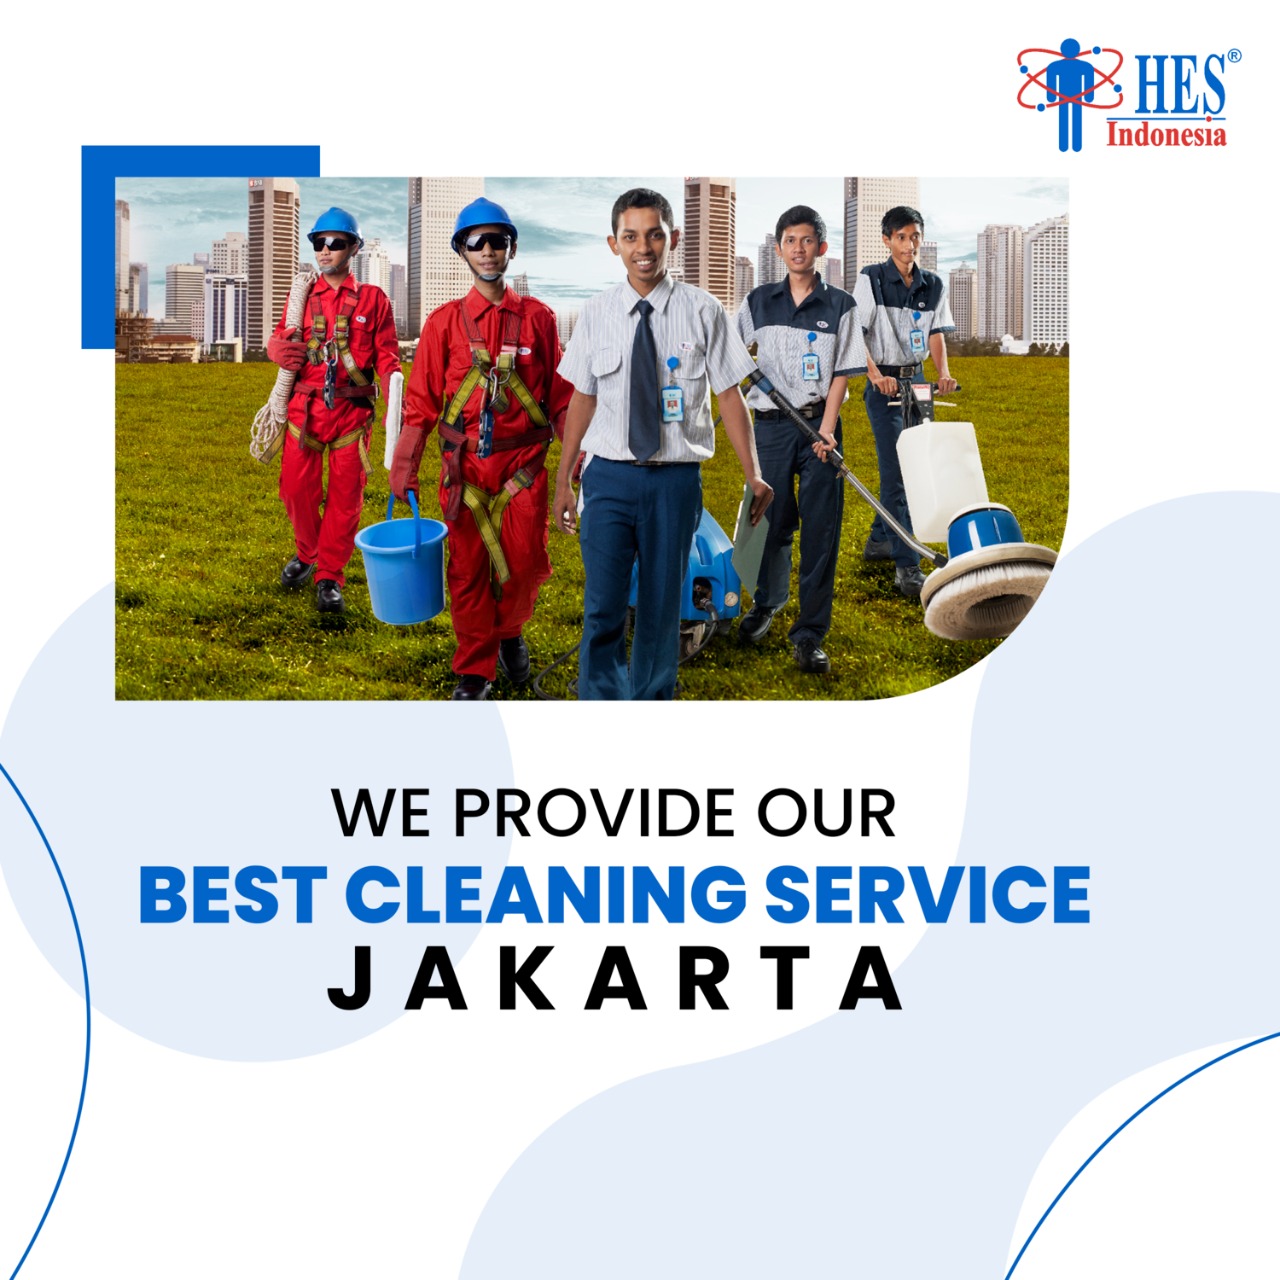 Cleaning Service Jakarta - Jasa Cleaning Service Jakarta